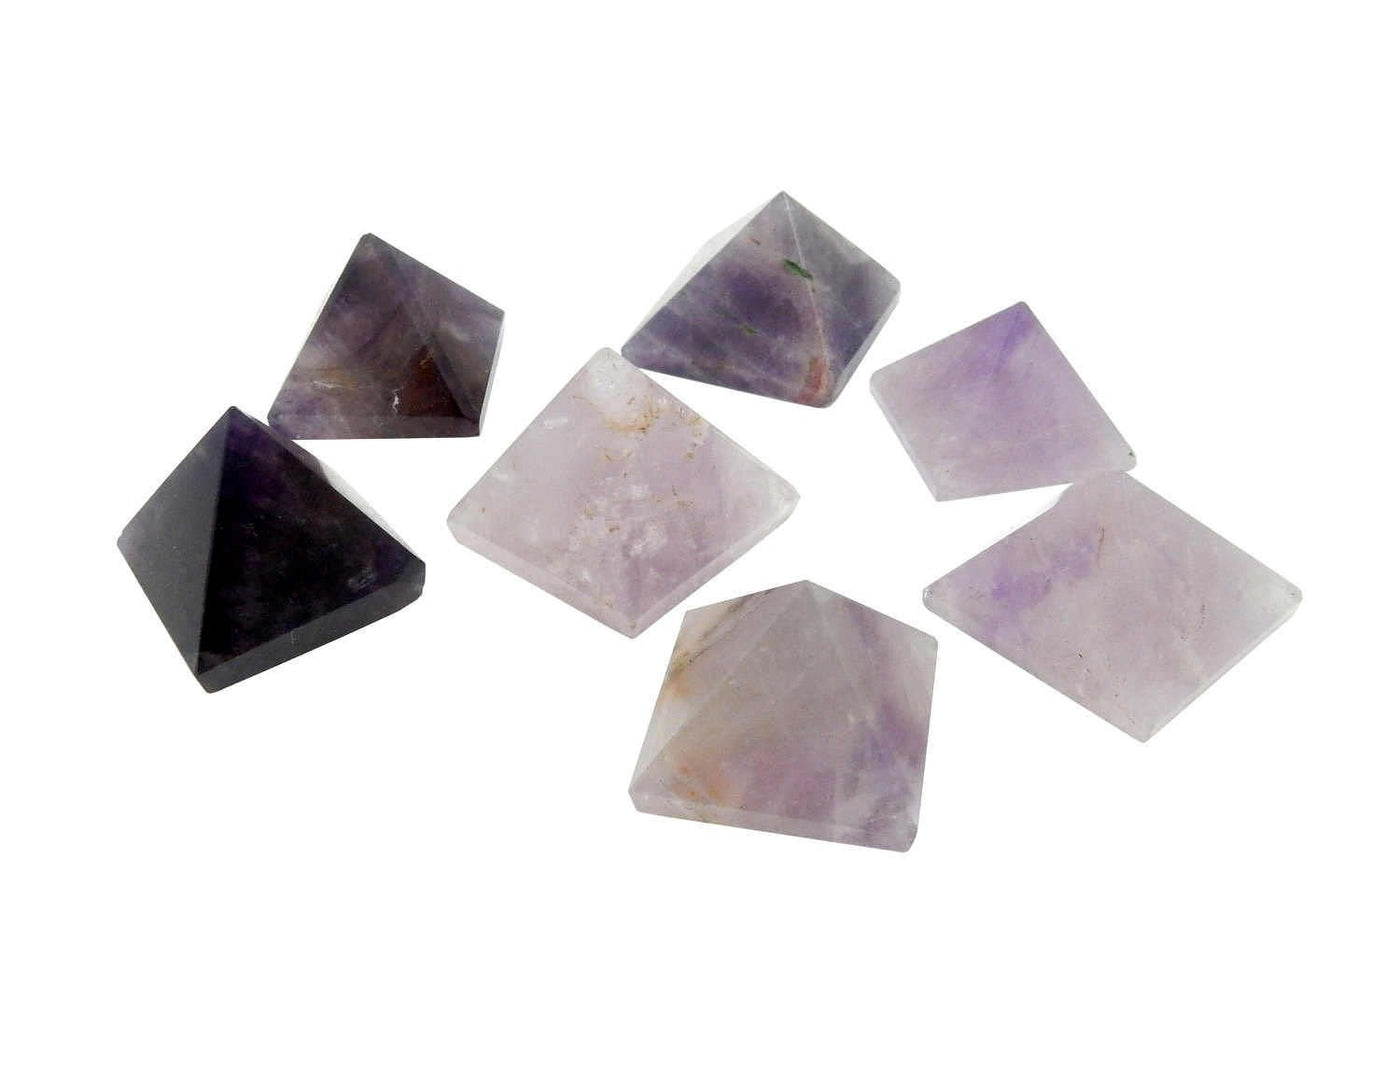 7 Amethyst Pyramids of varying shades of purple